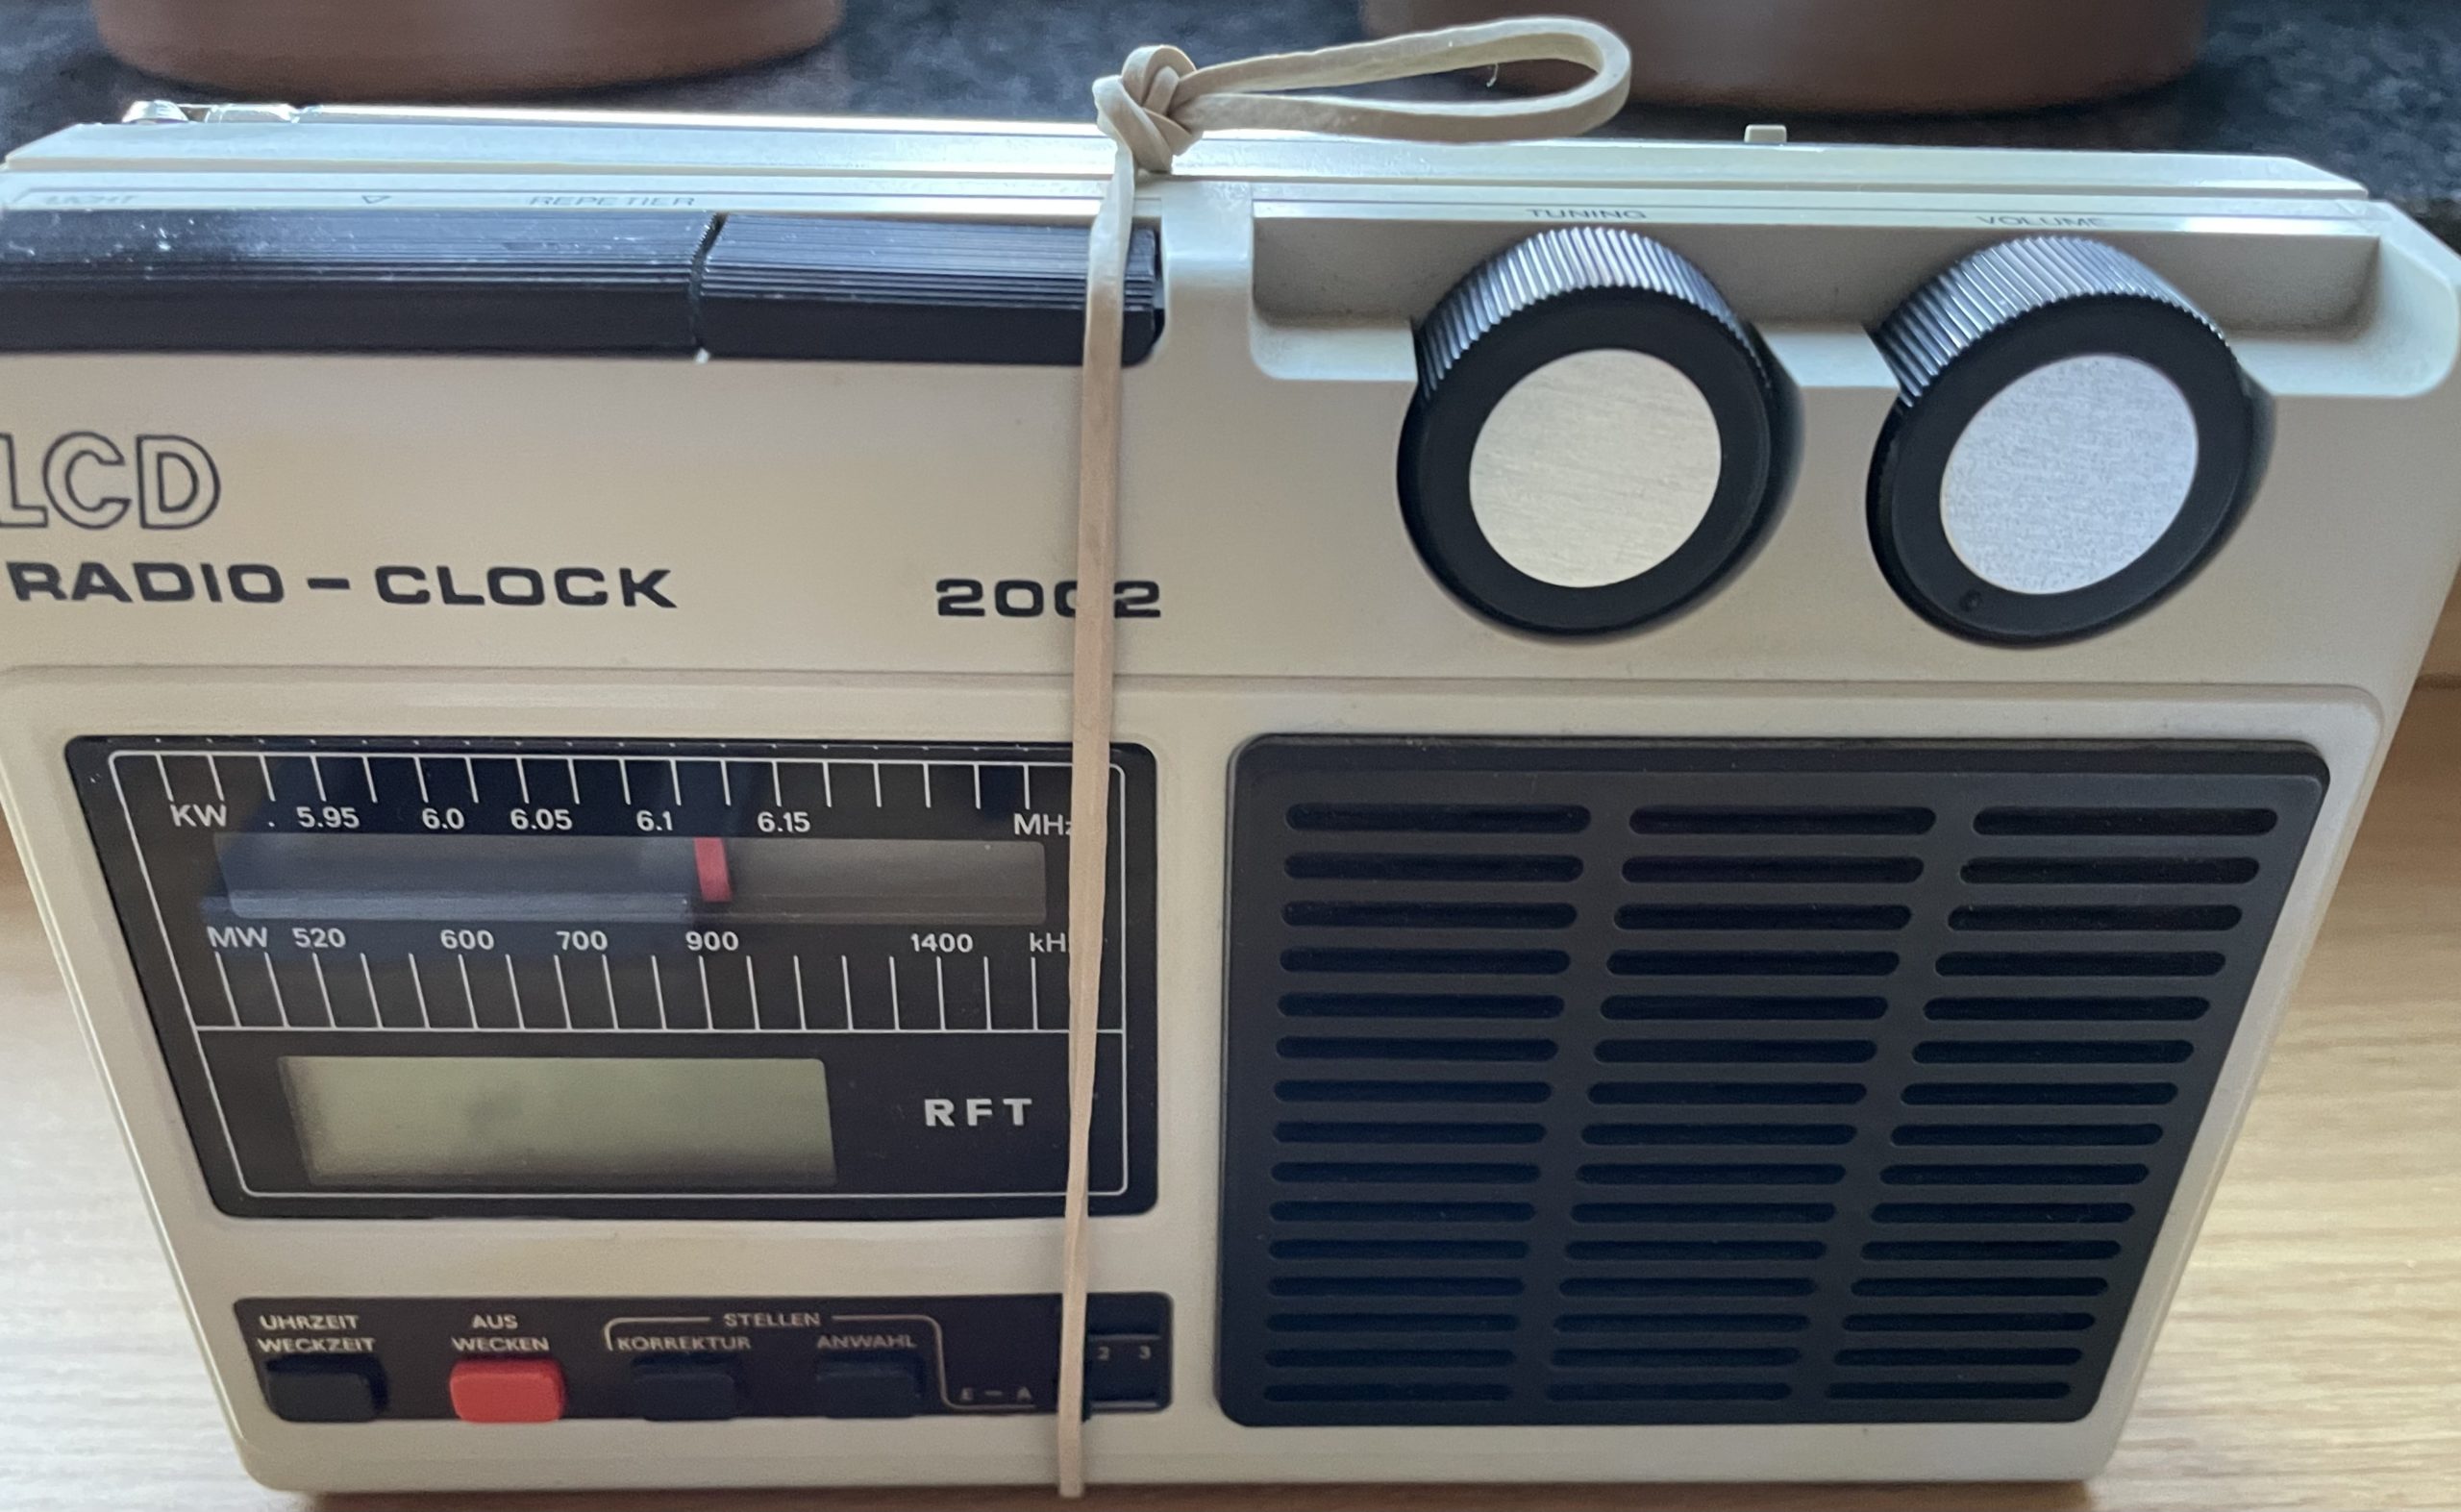 LCD Radio-Clock RC2002